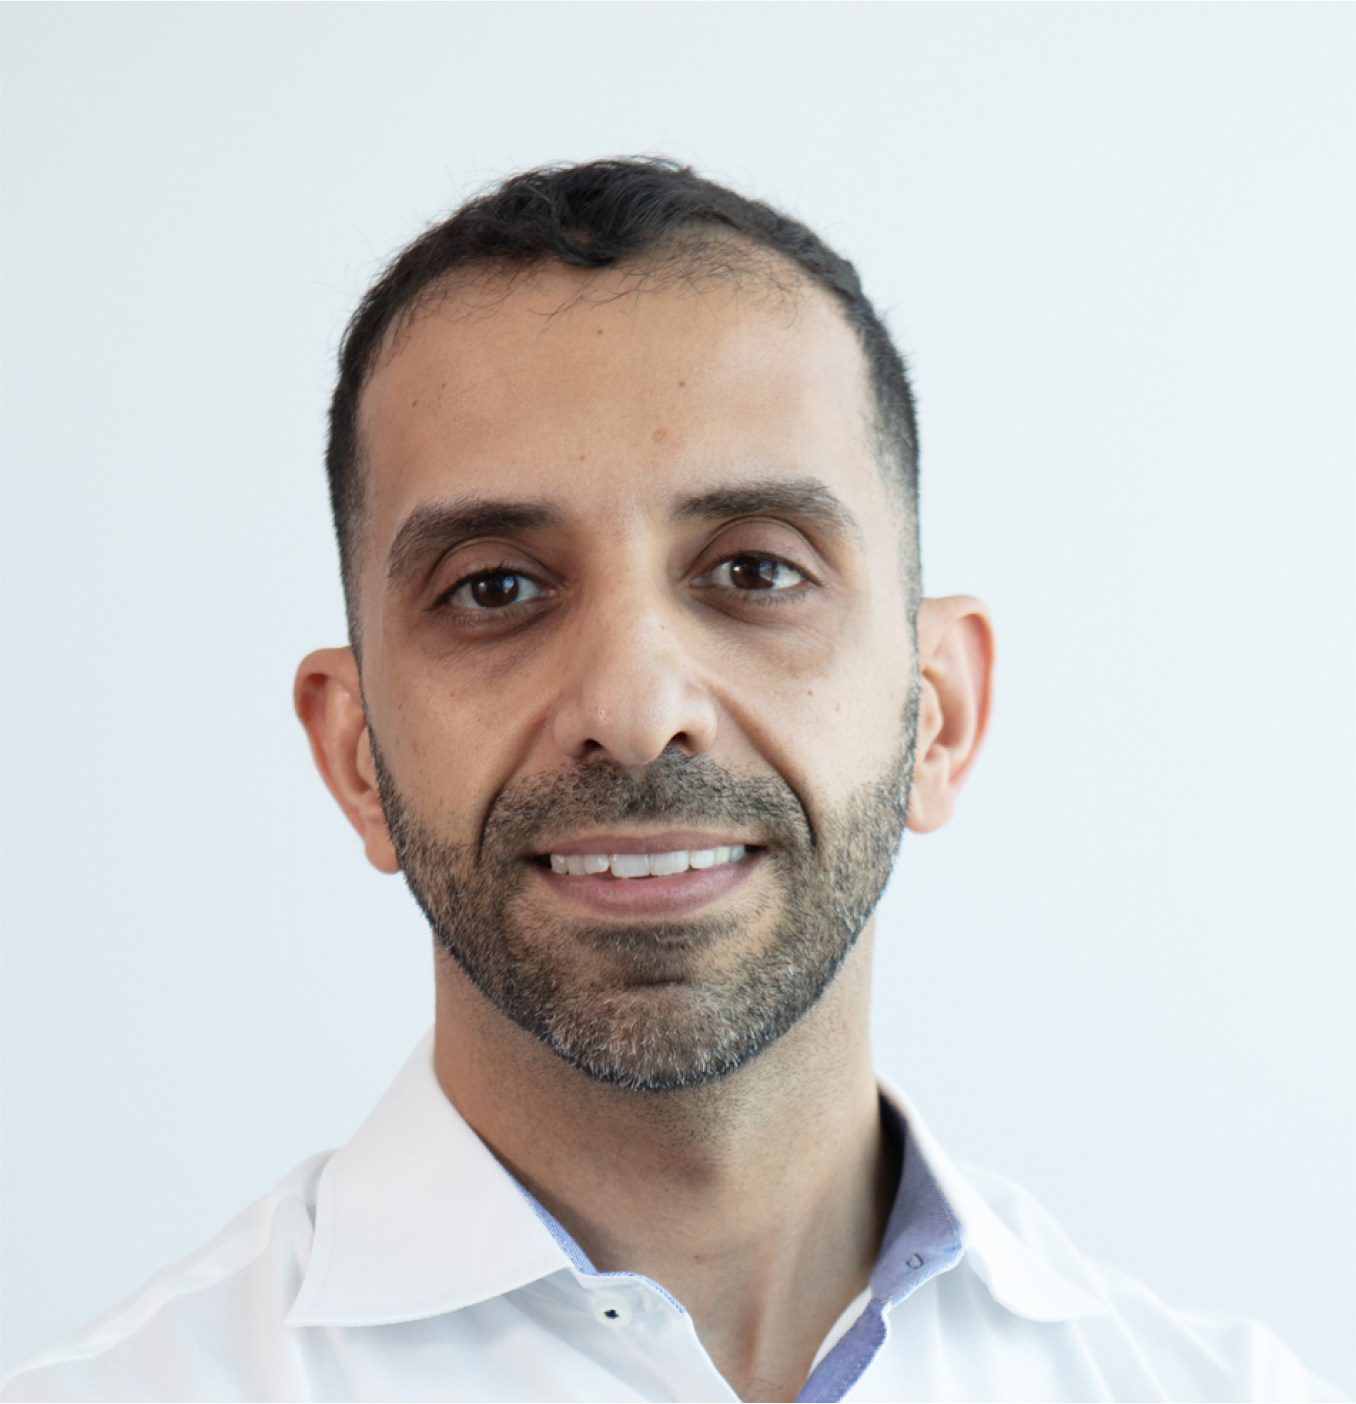 MENA Startup Veteran - Tariq Sanad - Joins Tarabut Gateway as CFO